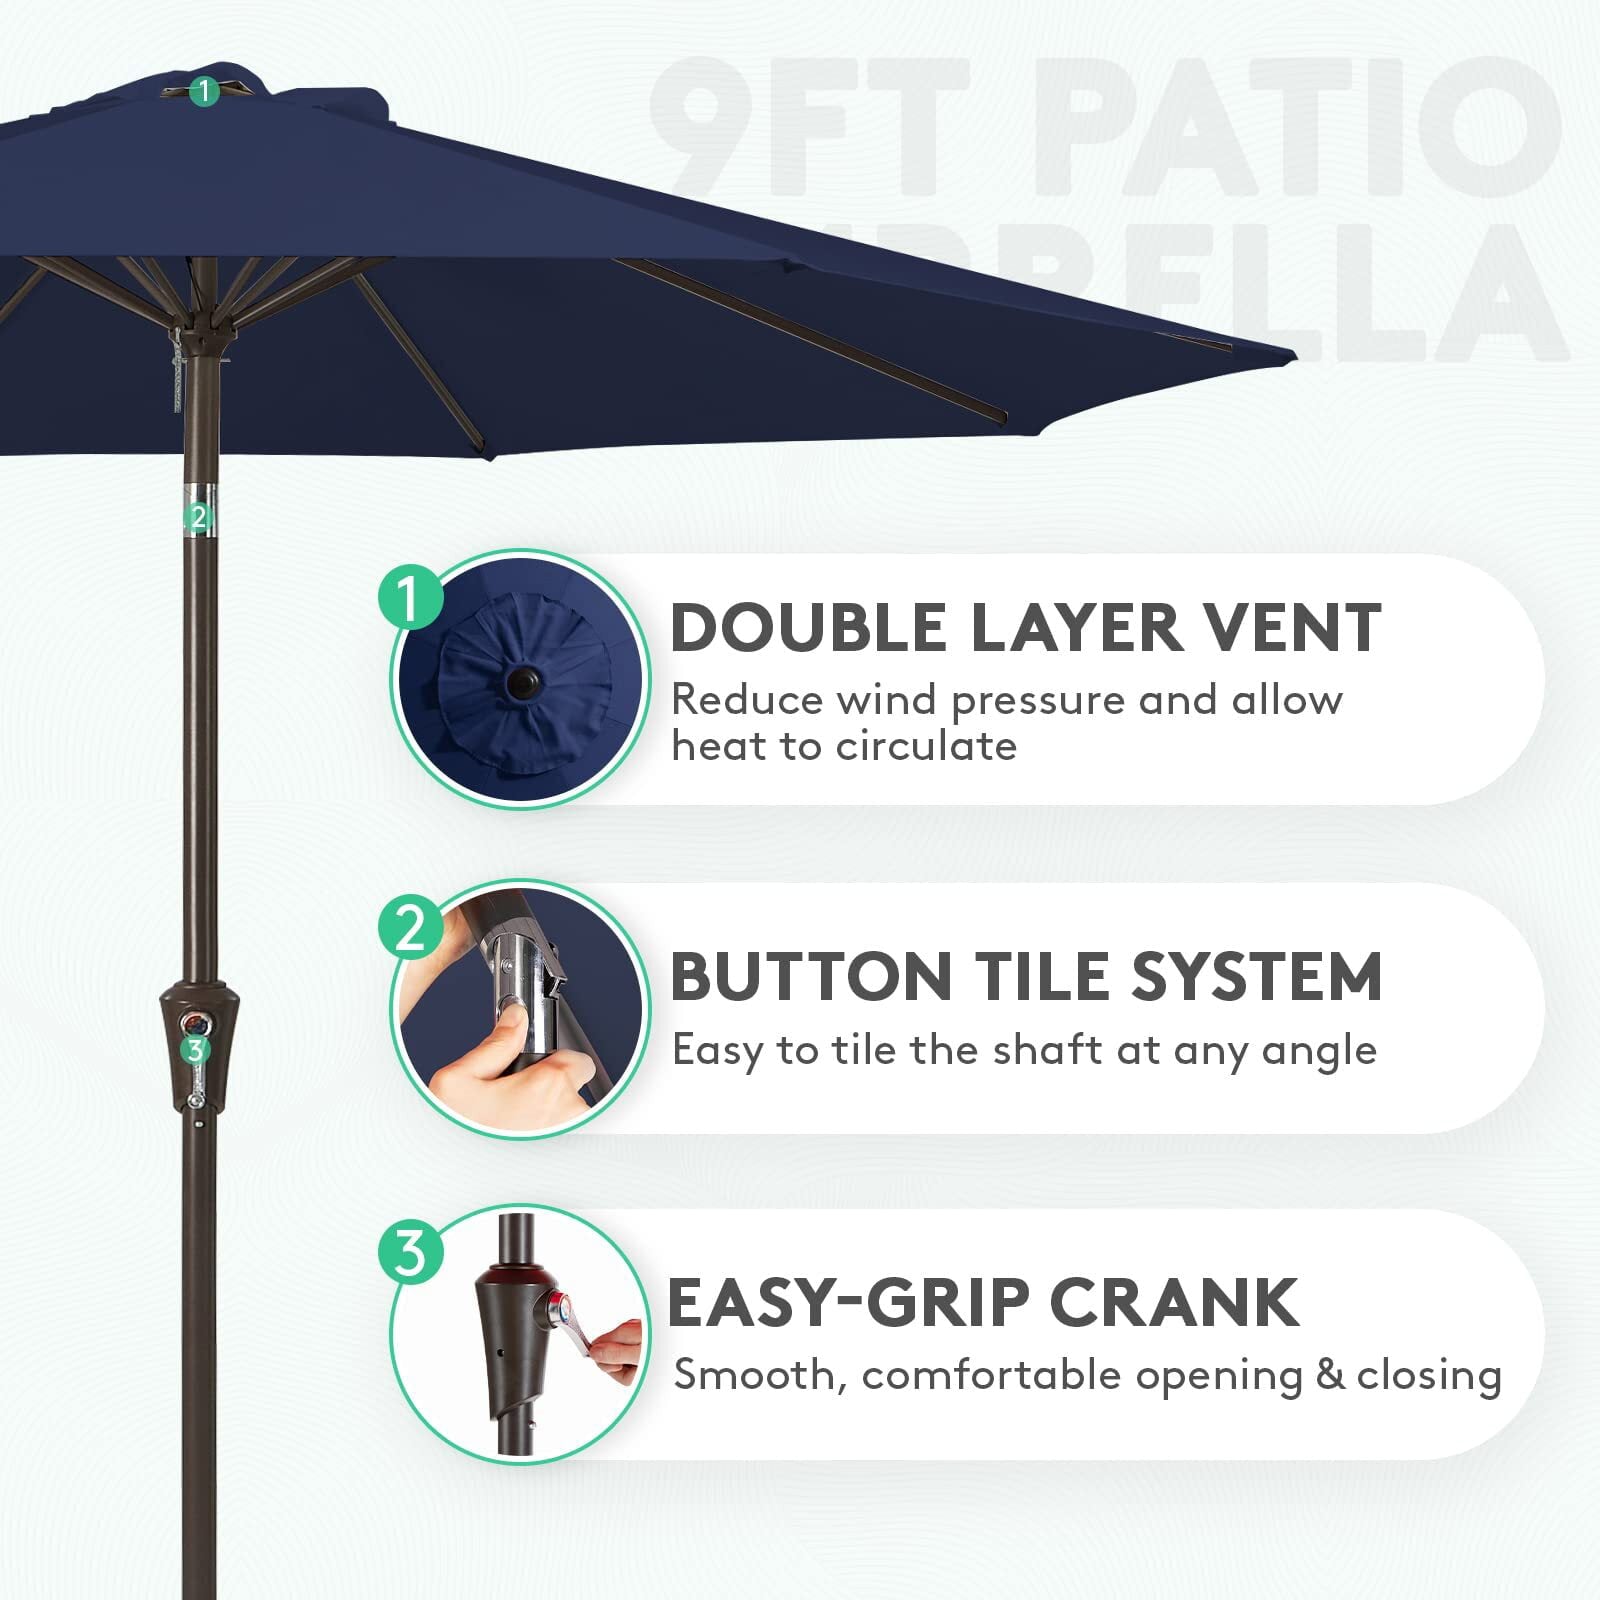 JEAREY 9FT Outdoor Patio Umbrella Outdoor Table Umbrella with Push Button Tilt and Crank,Navy